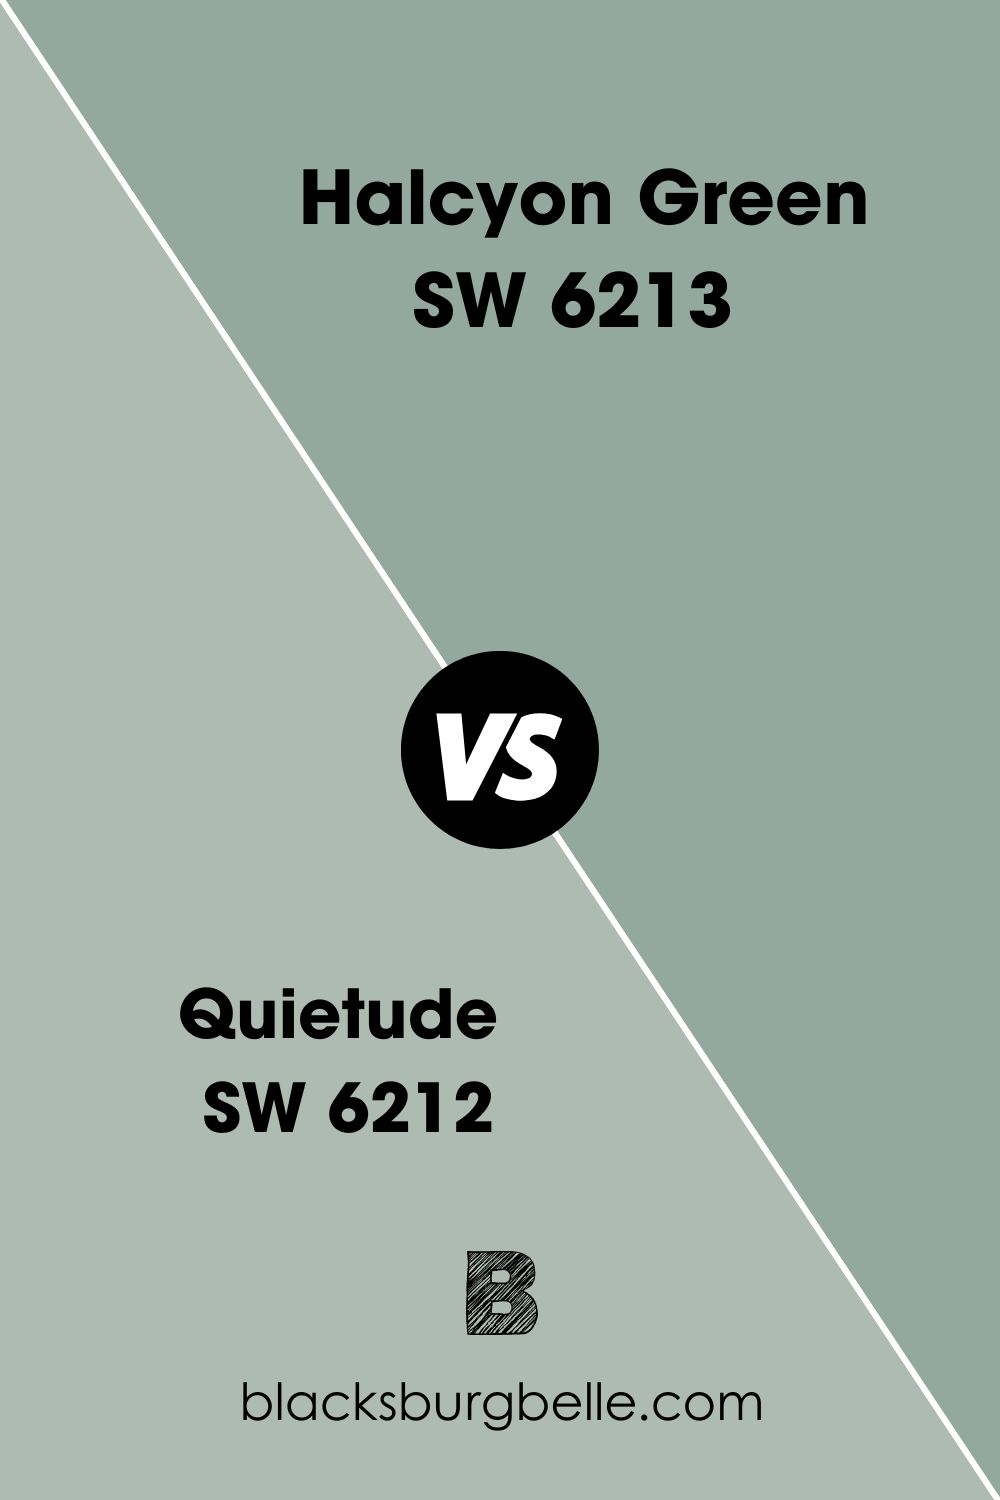 Quietude SW 6212